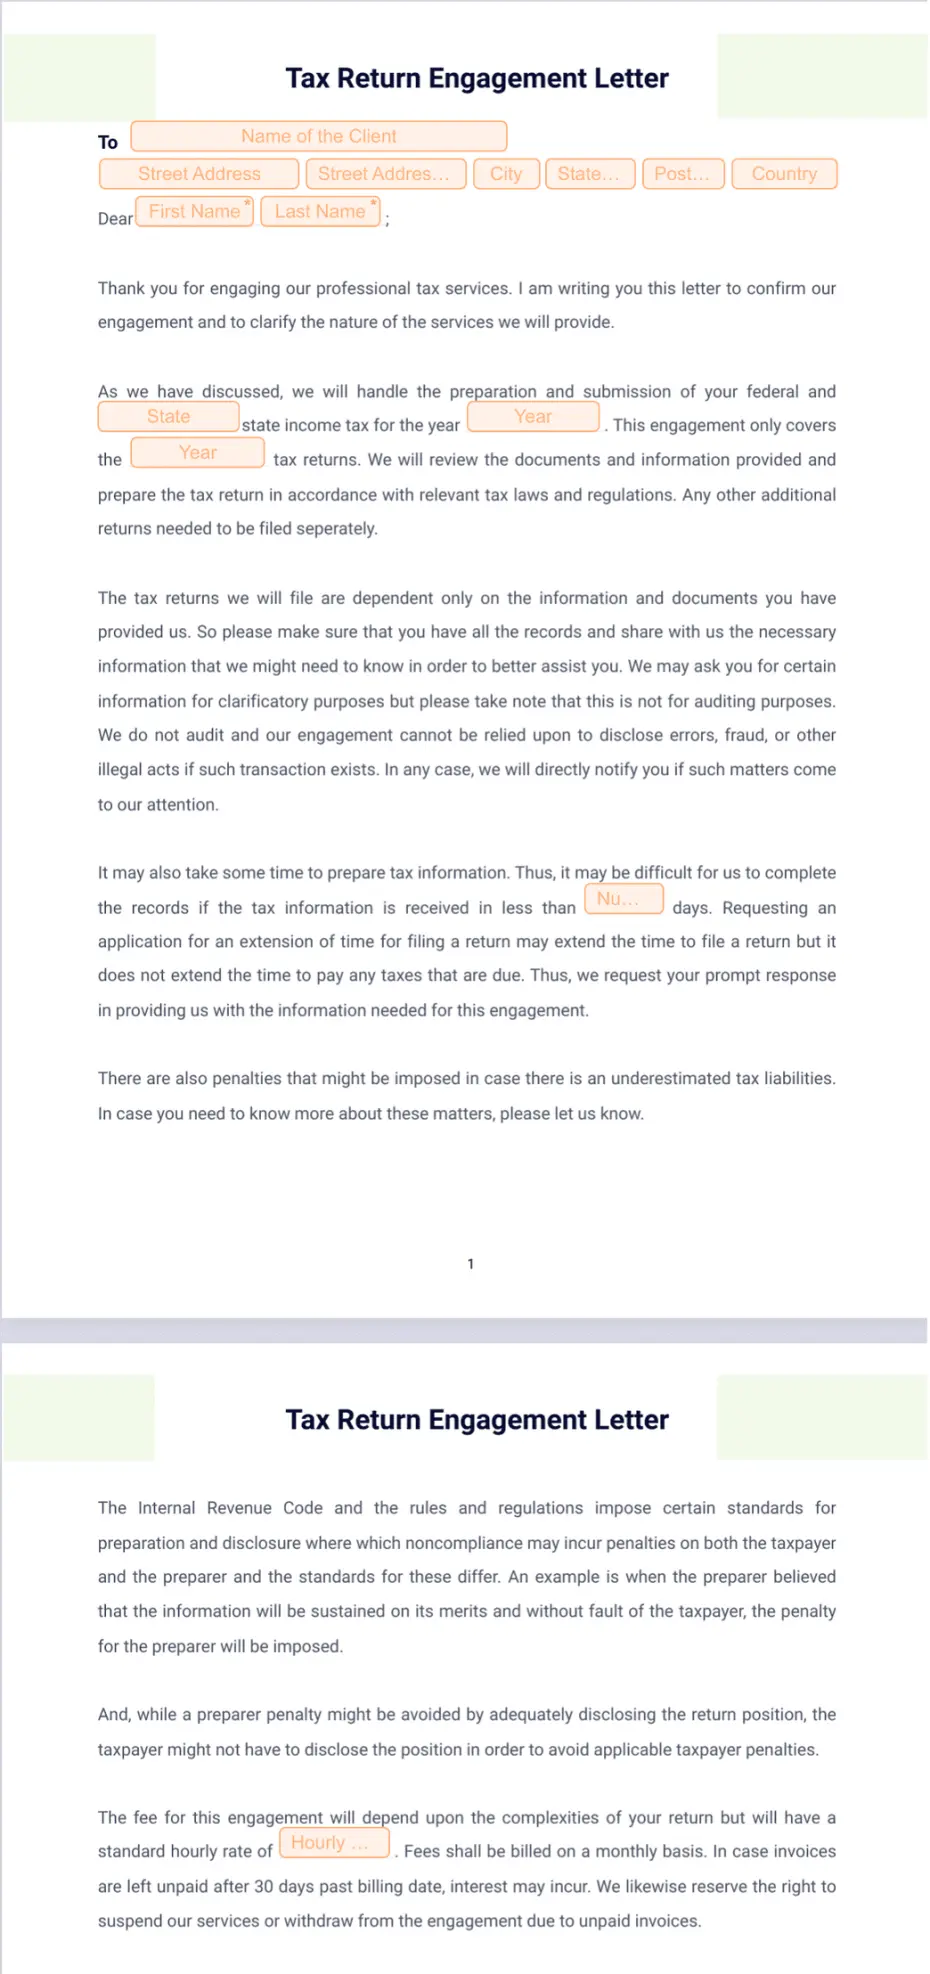 Tax Return Engagement Letter